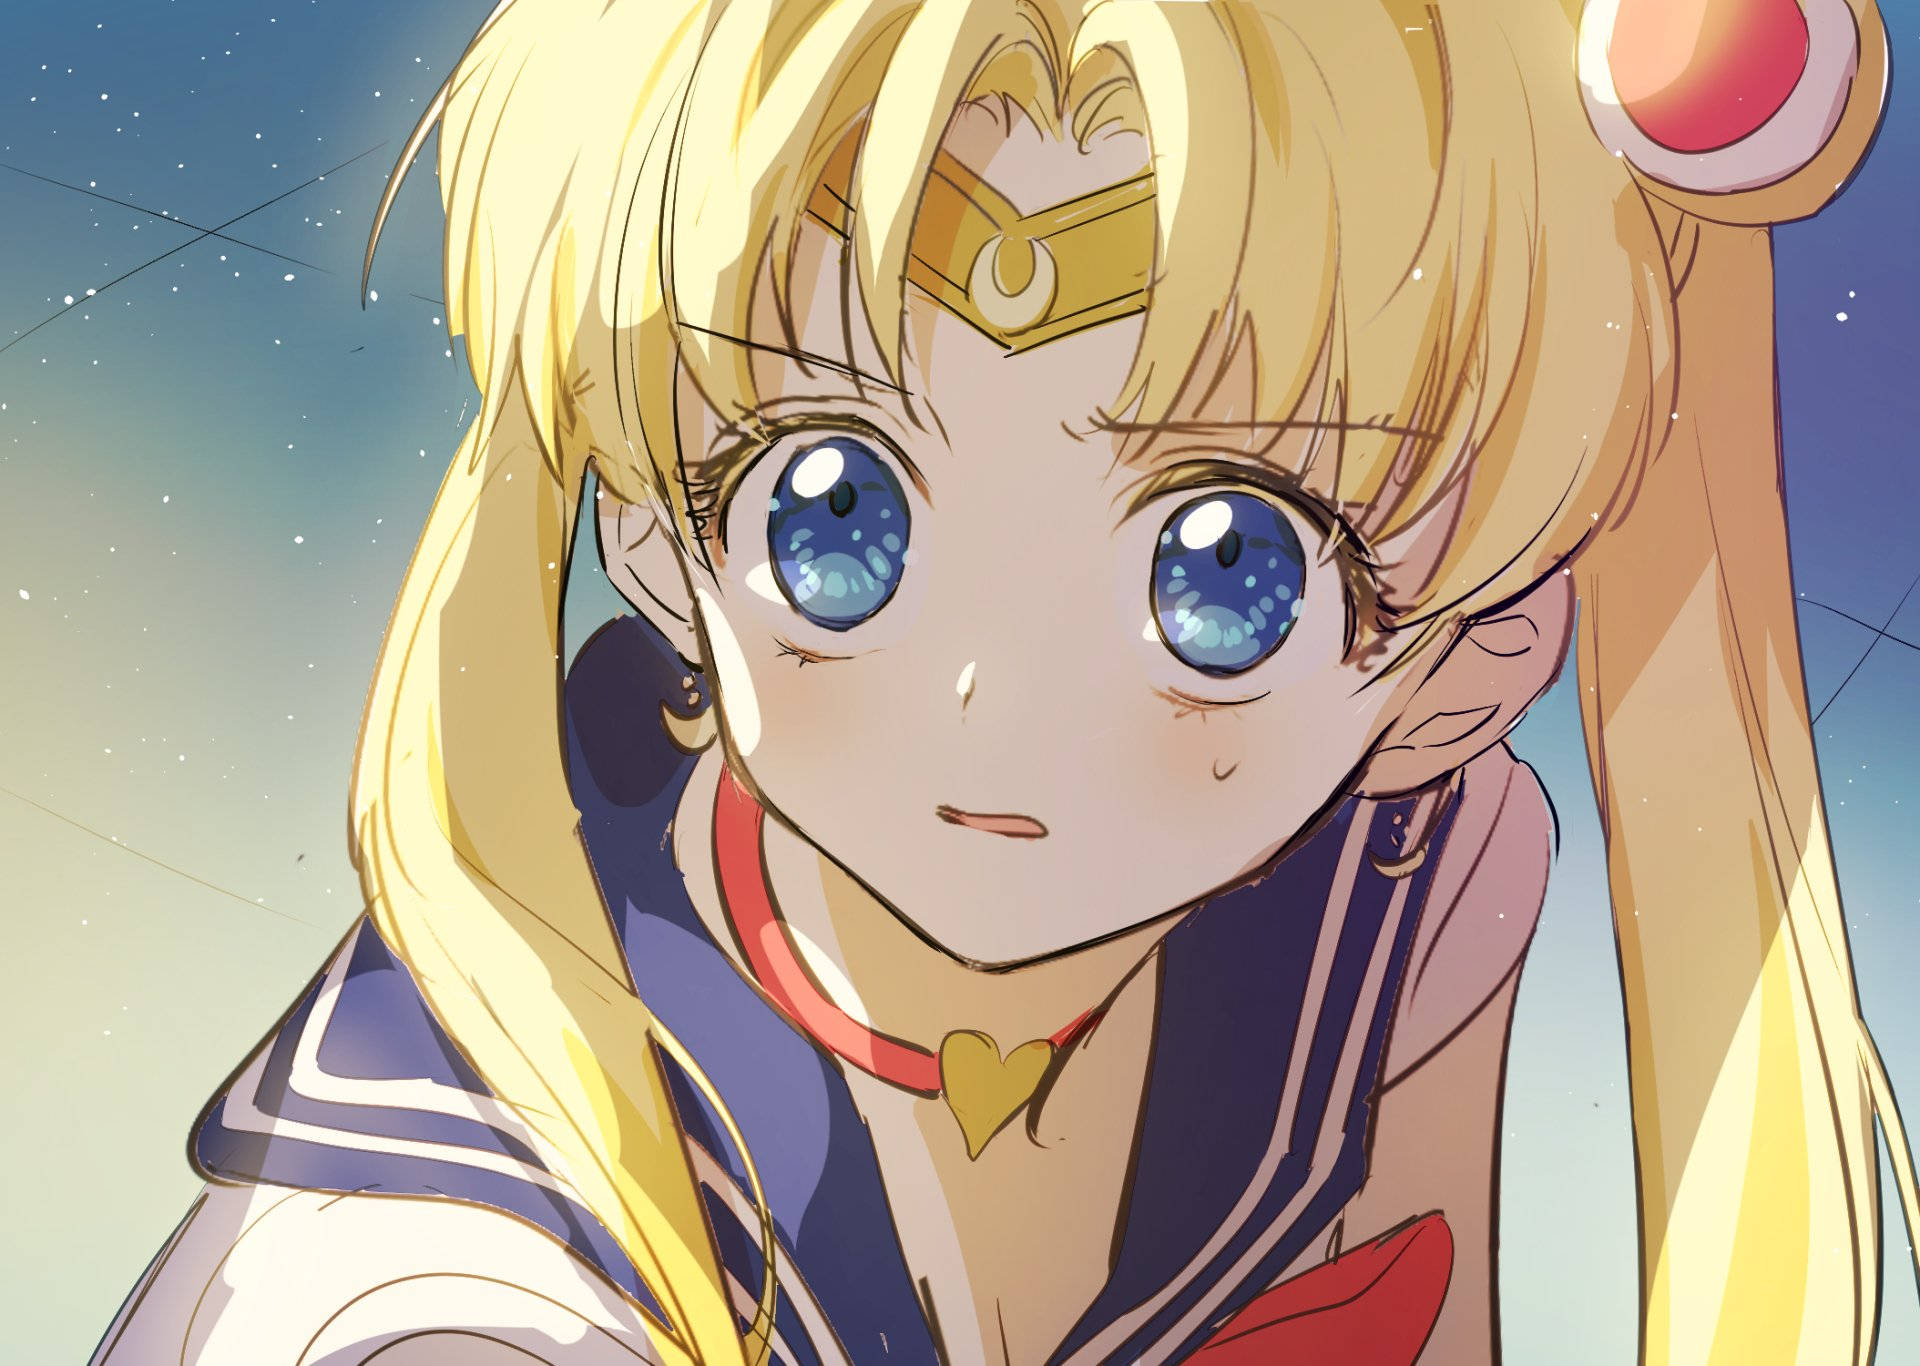 Cute Sailor Moon Wallpaper